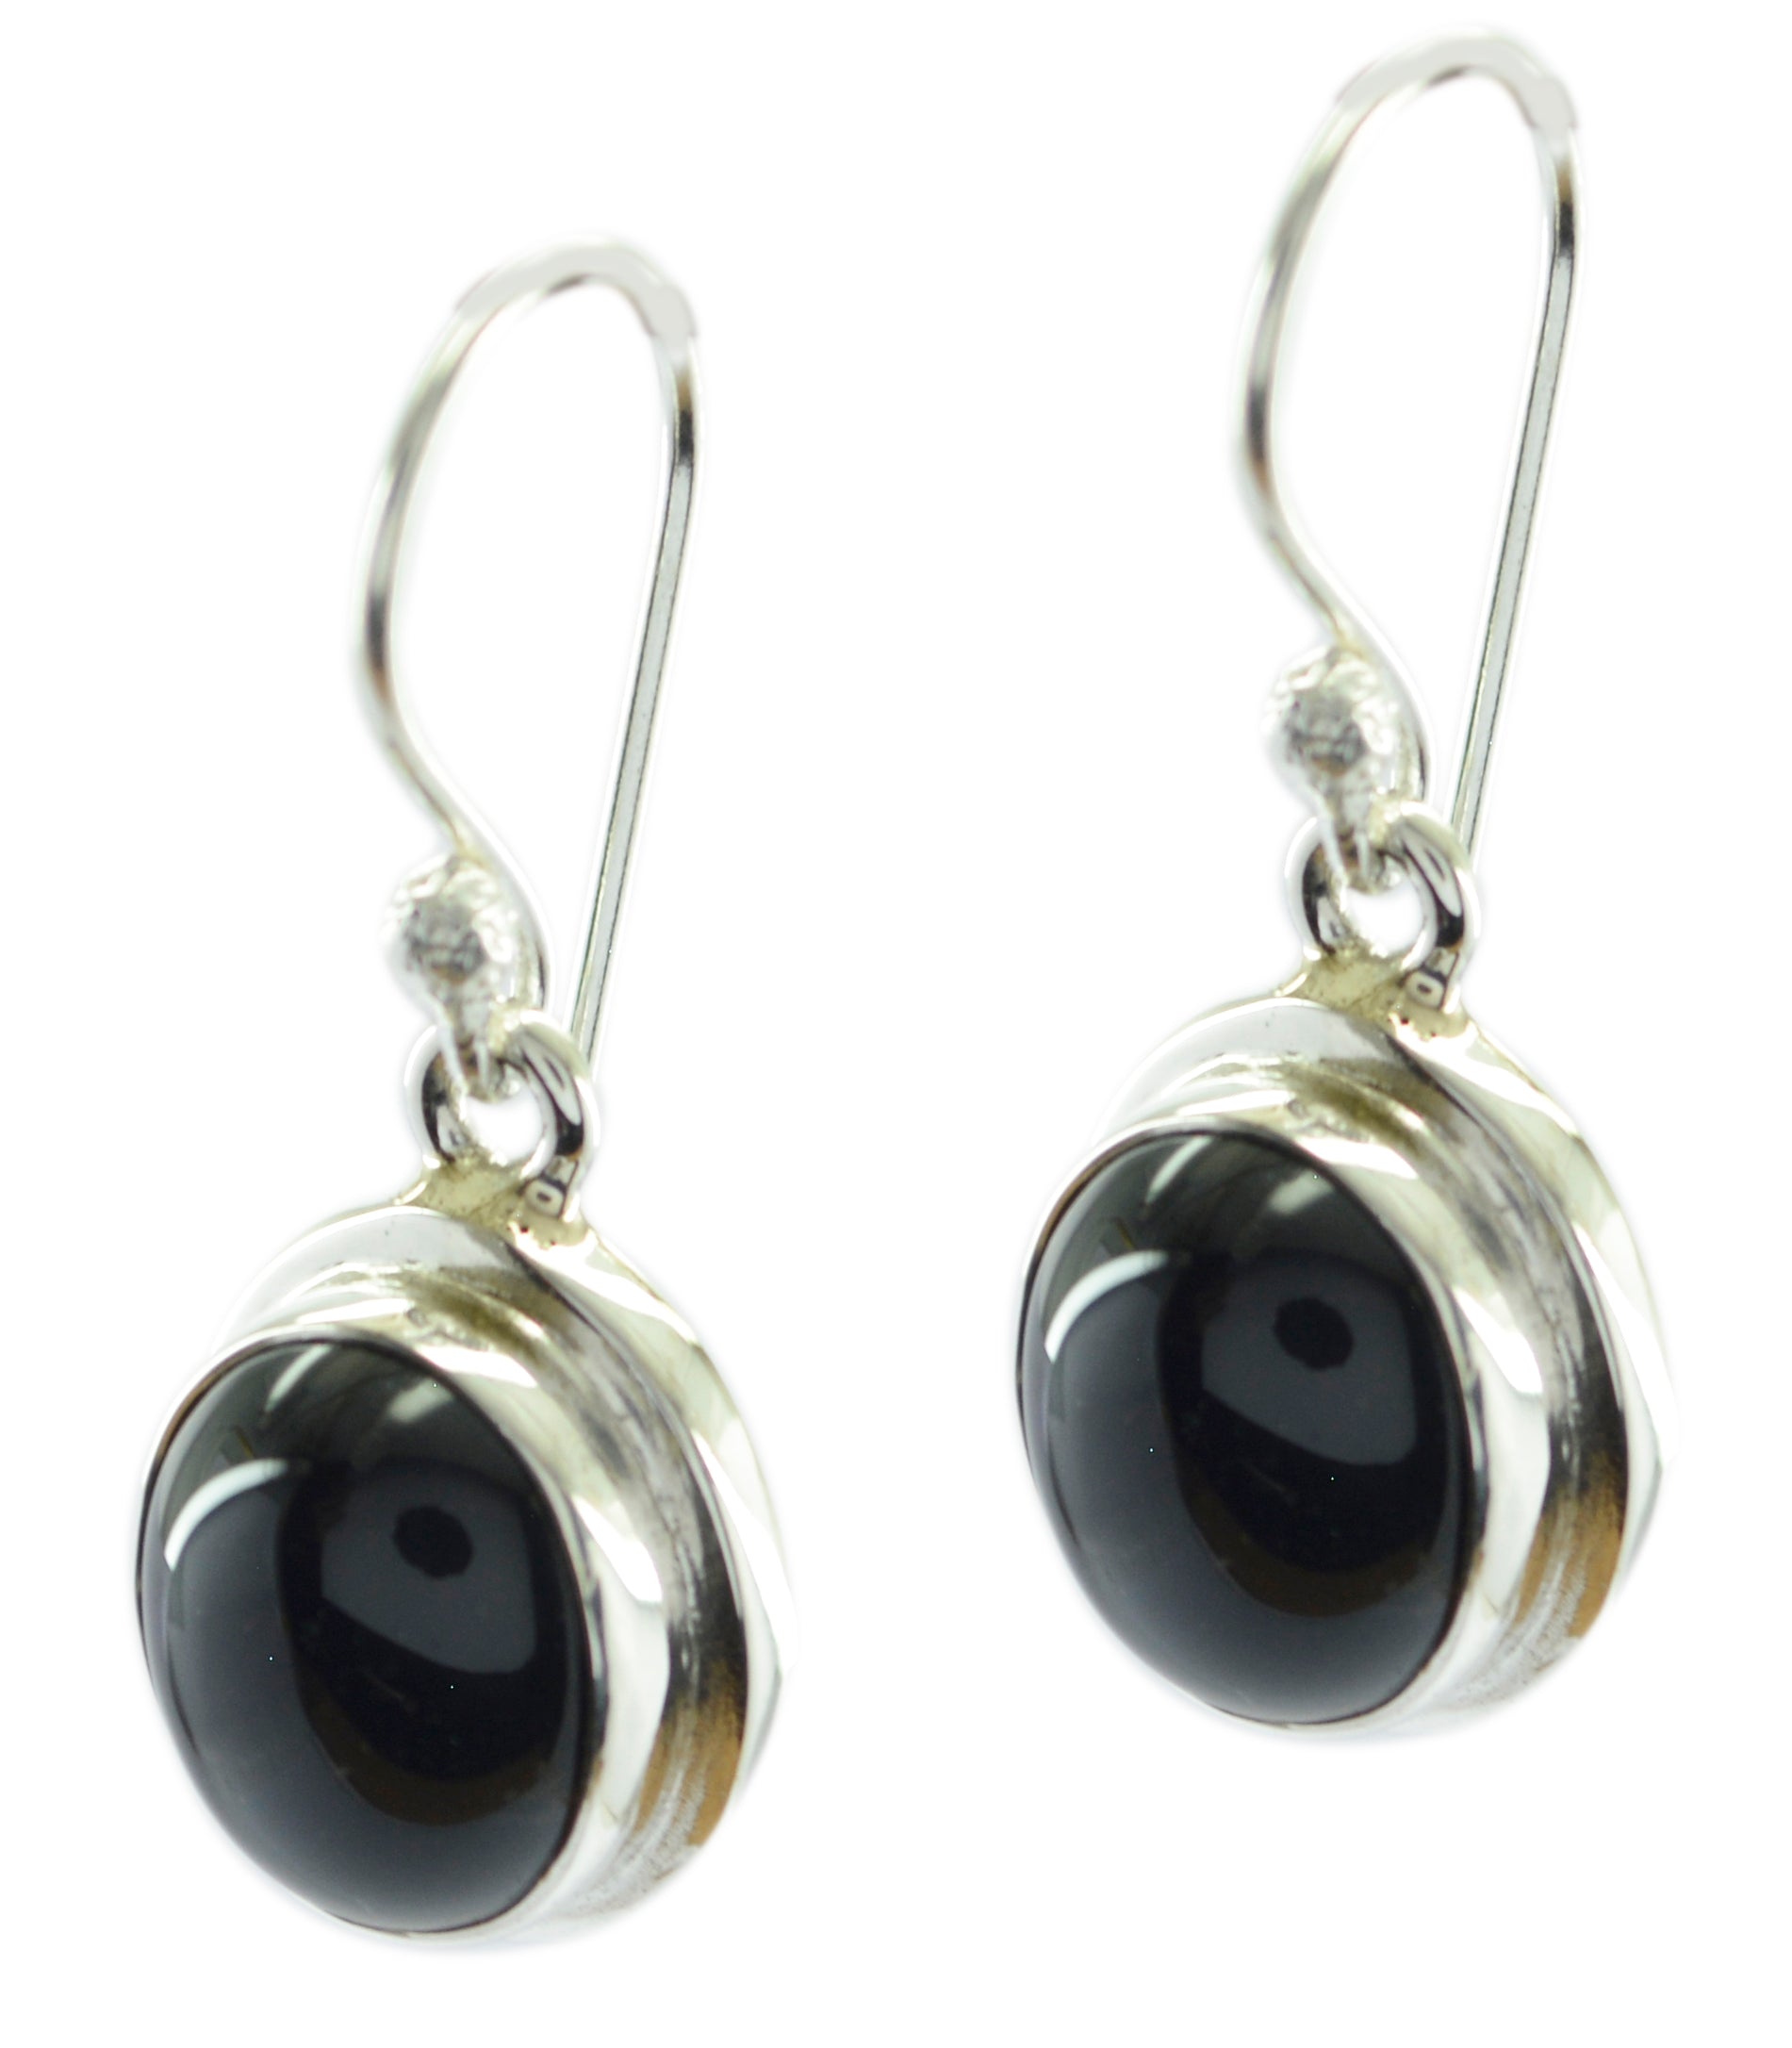 Riyo Good Gemstones round Cabochon Black Onyx Silver Earrings gift for valentine's day